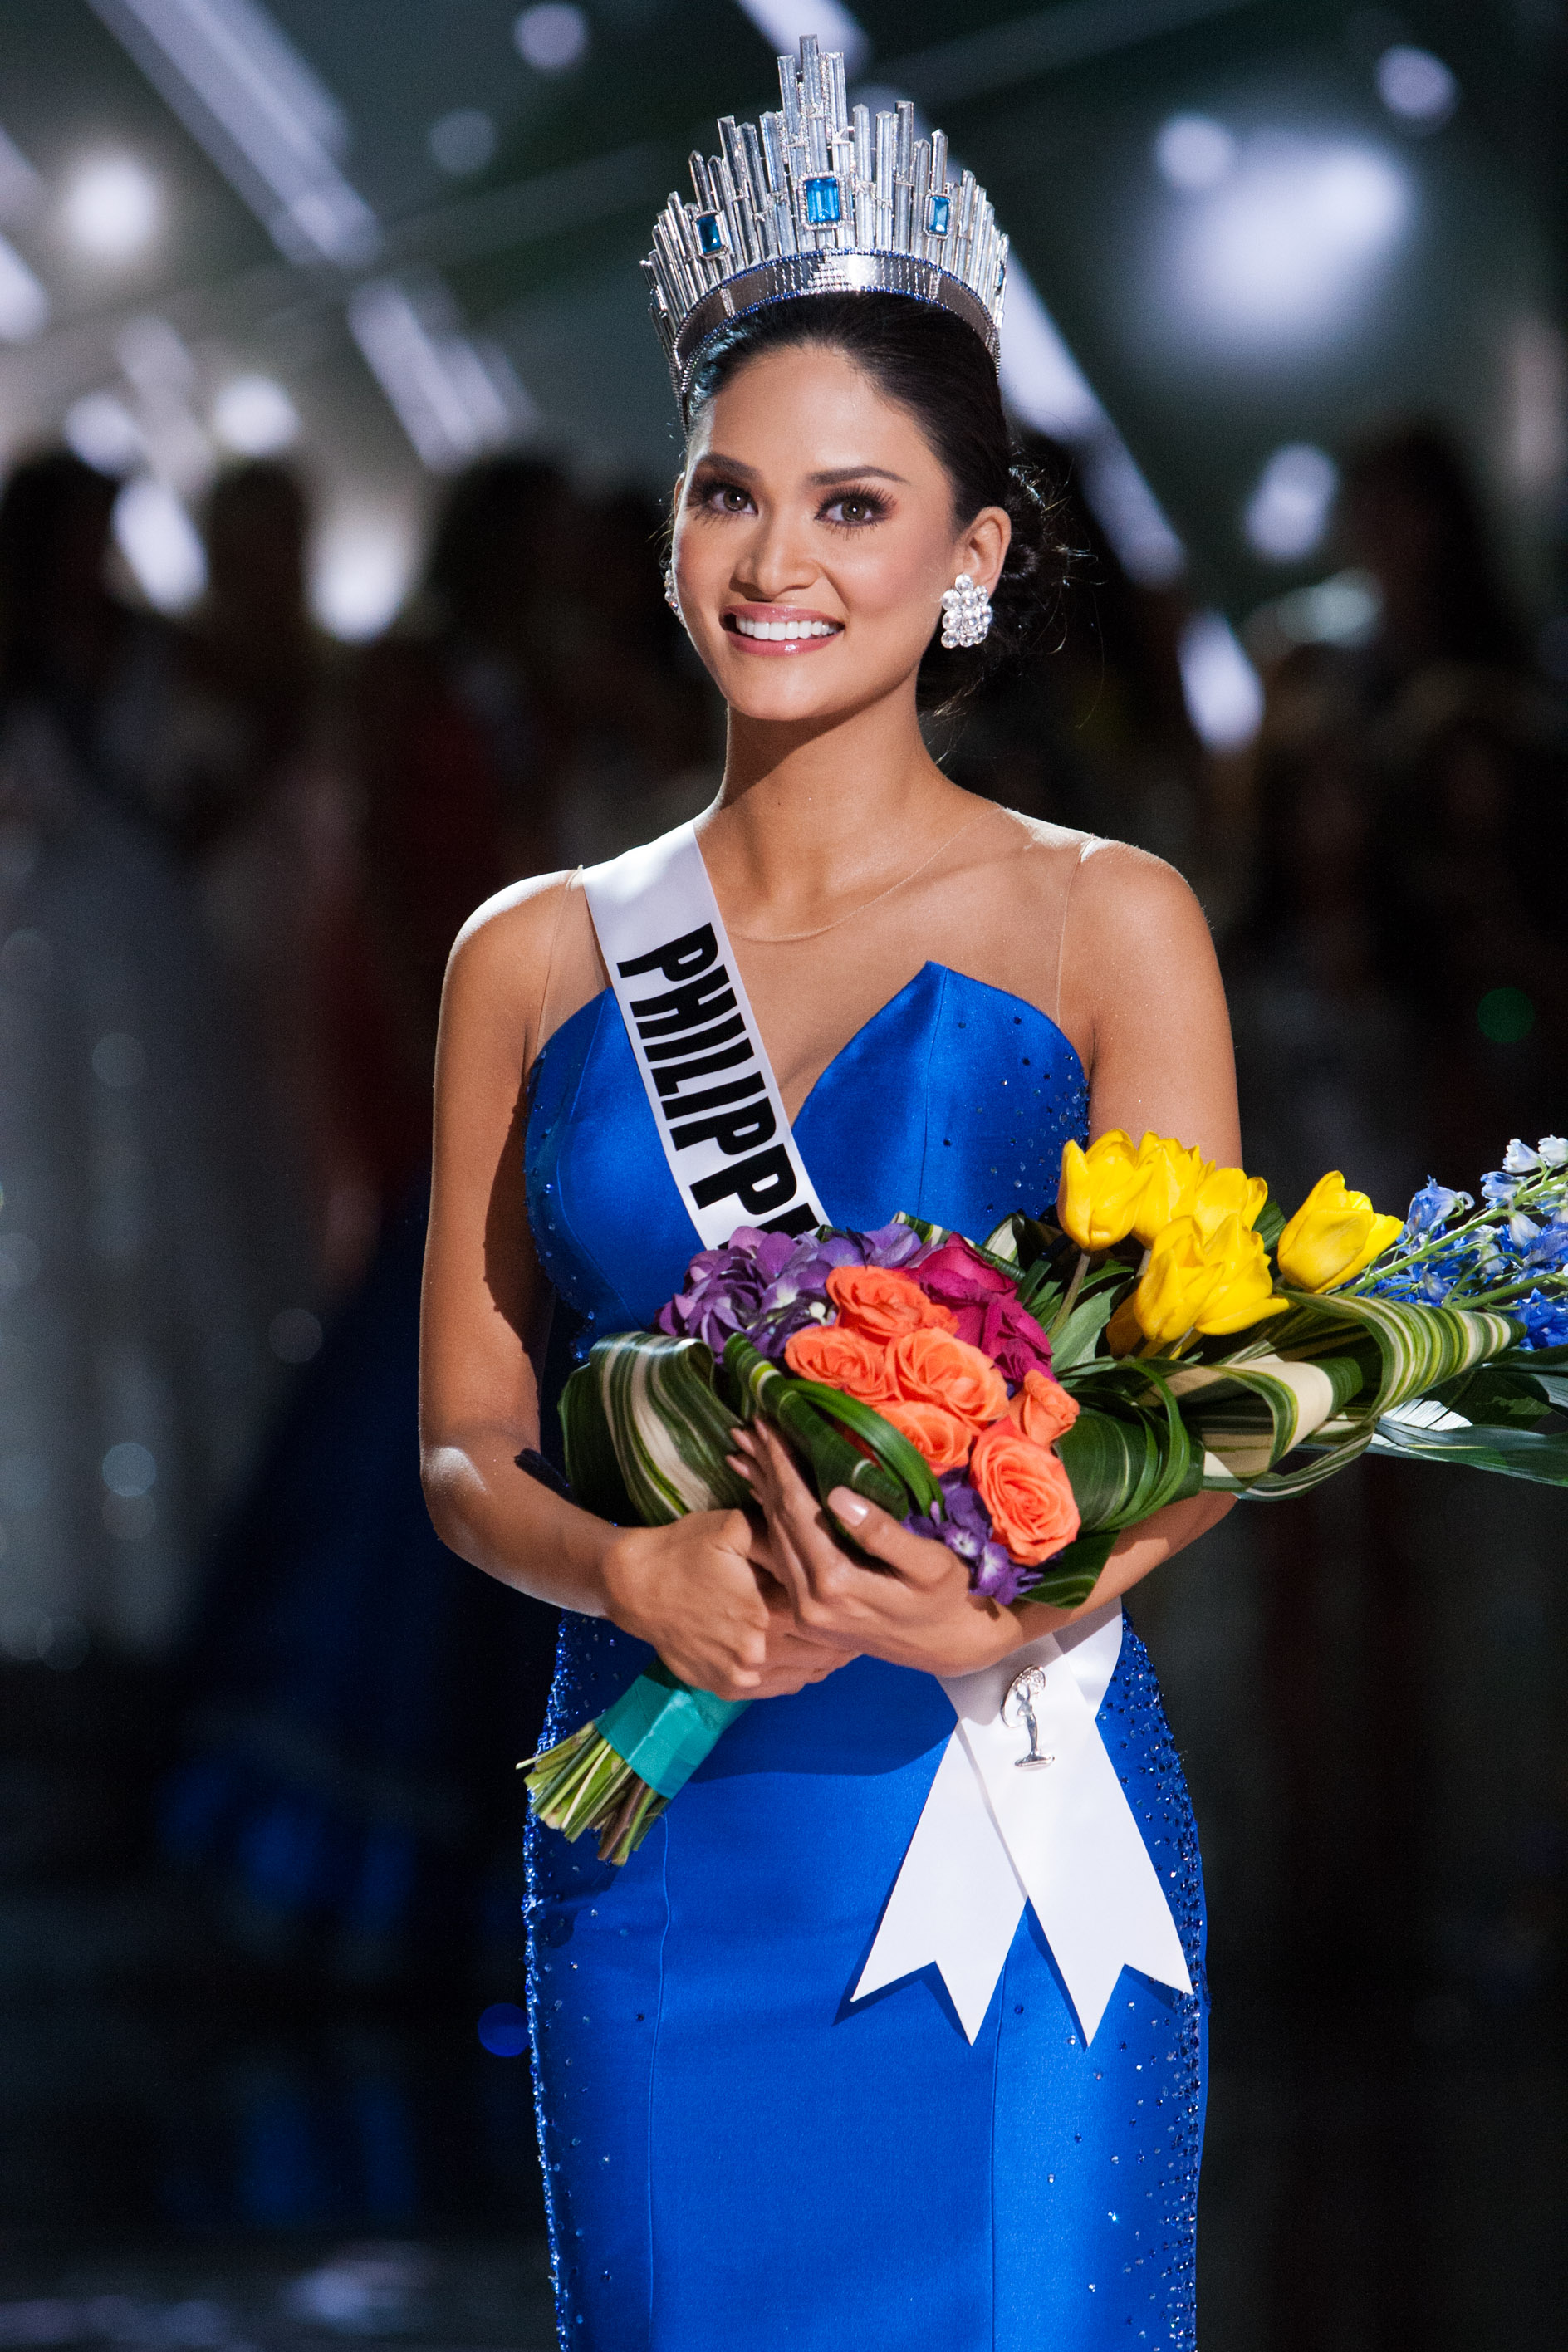 Miss Universe 2015 Pia Alonzo Wurtzbach A Portrait Of Beauty And Perseverance Lifestyleinq